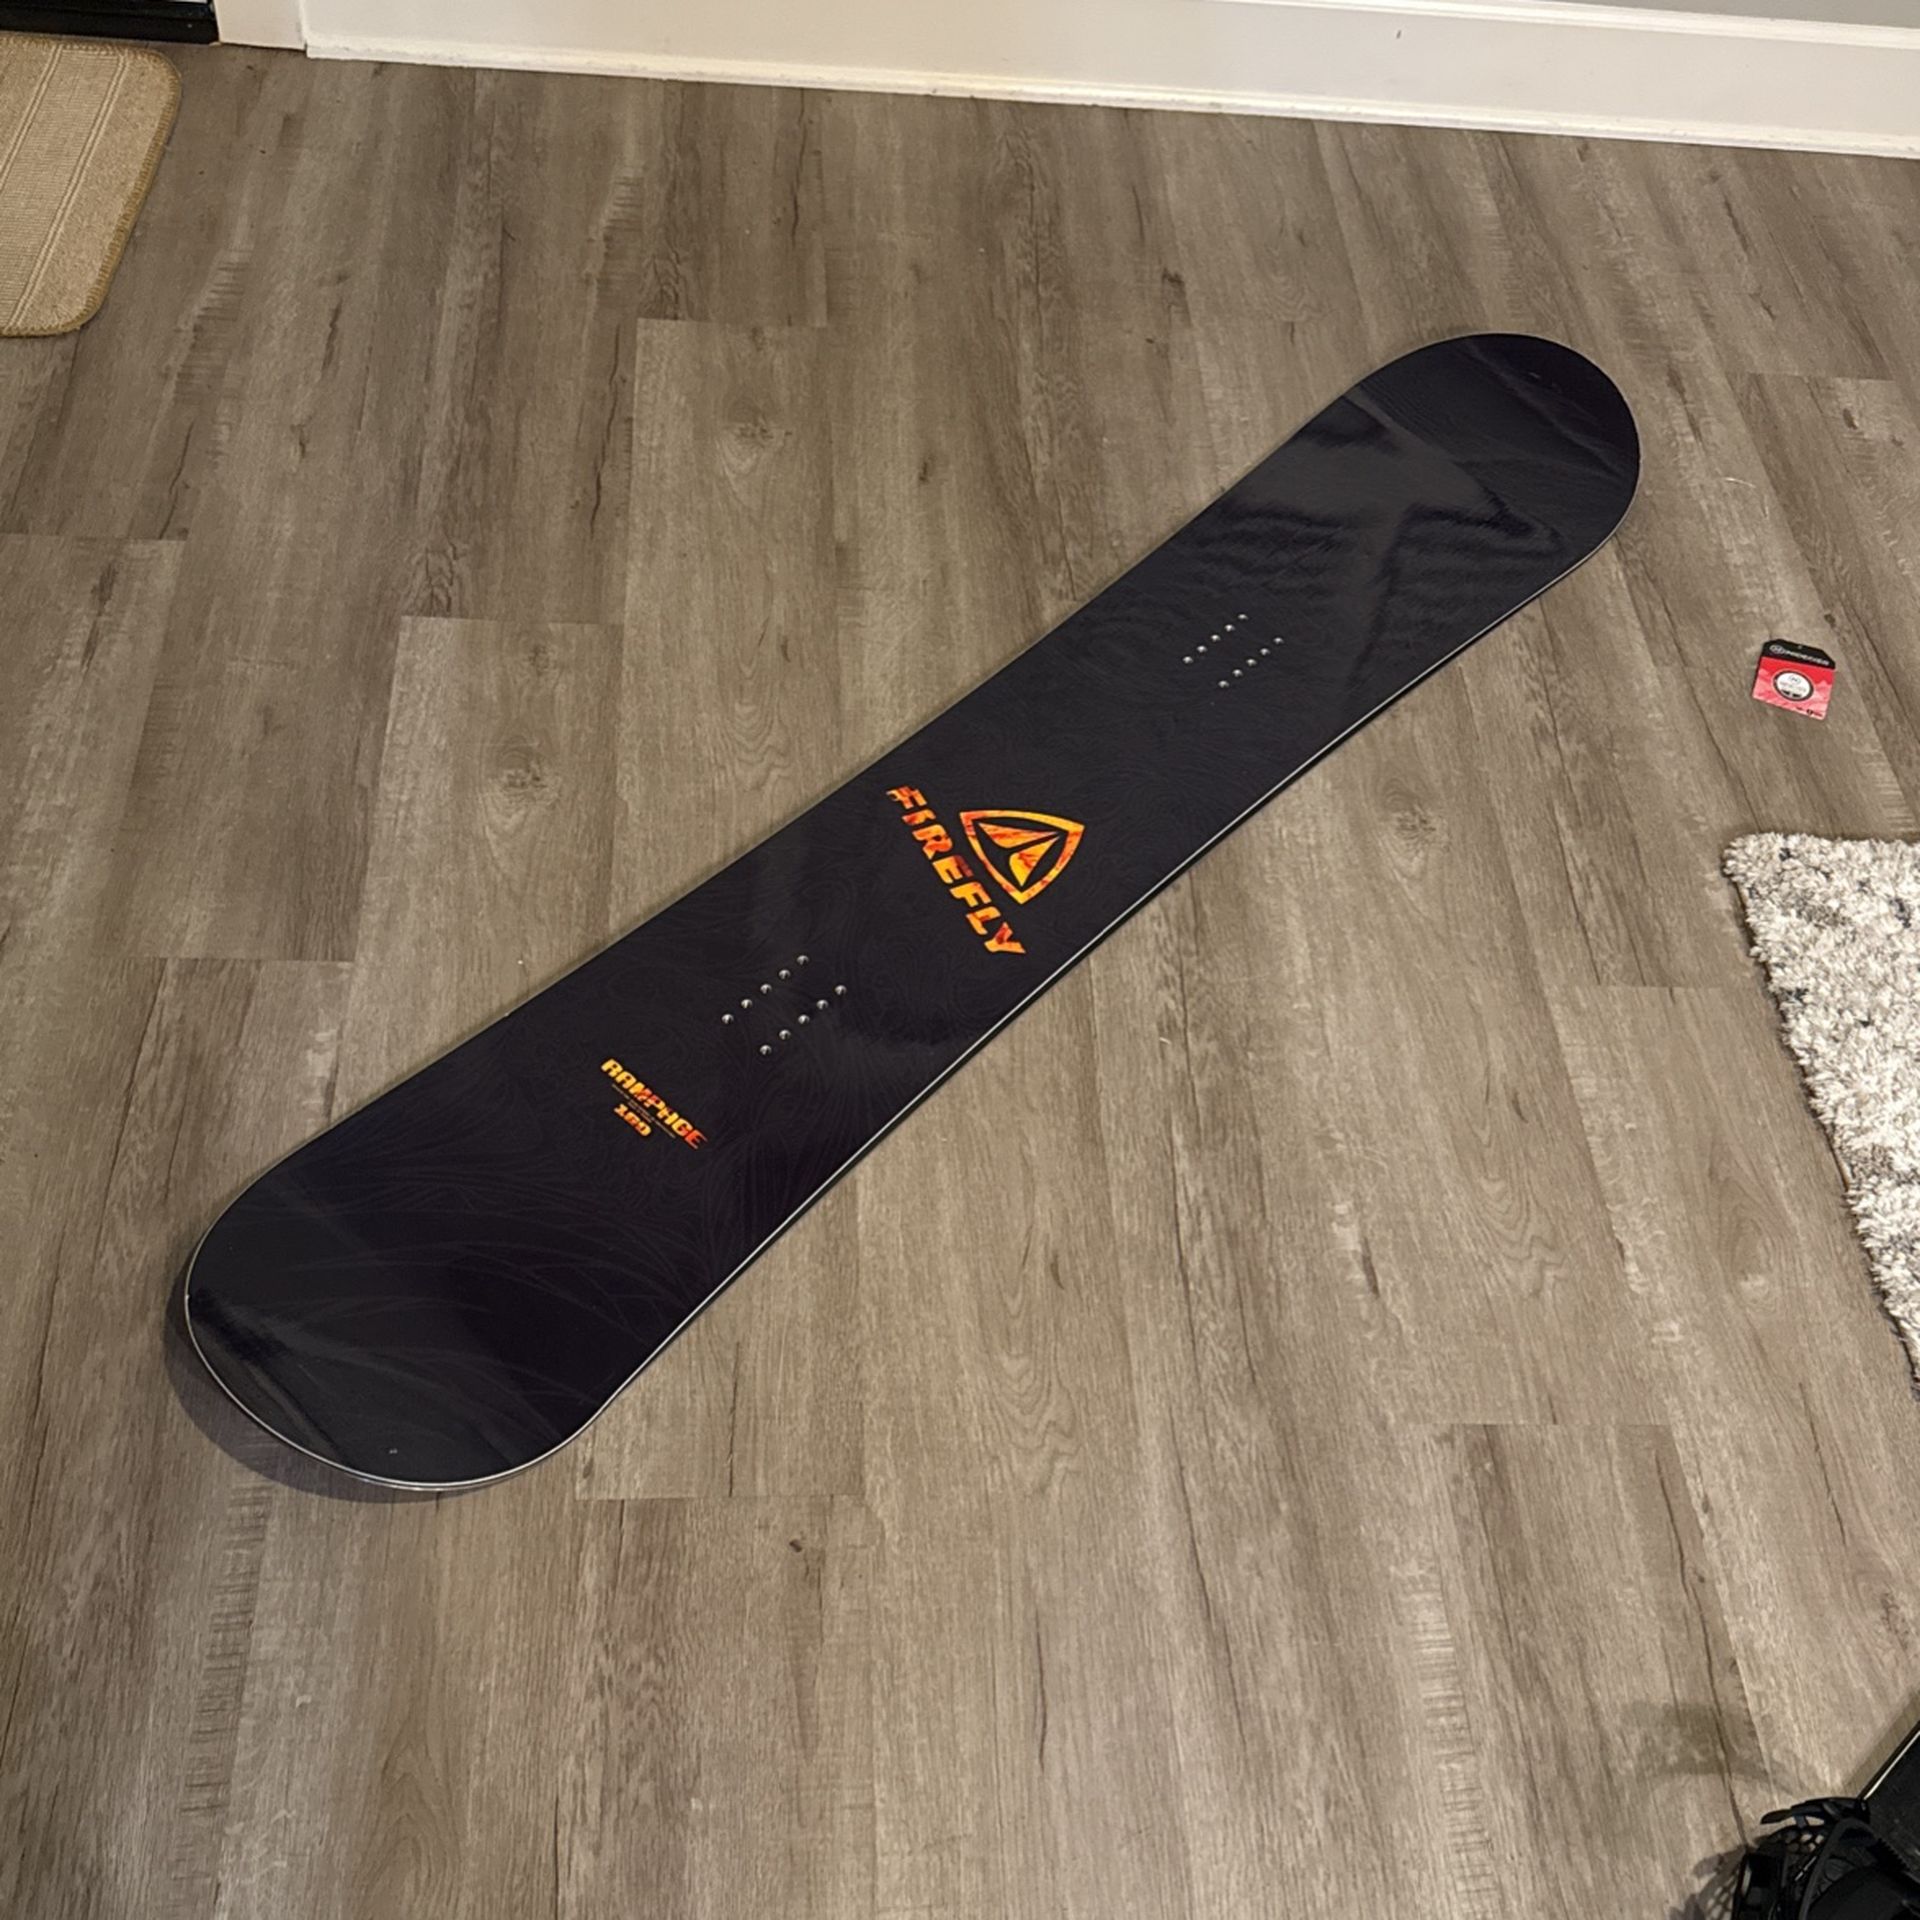 Snowboard Firefly Rampage 160cm